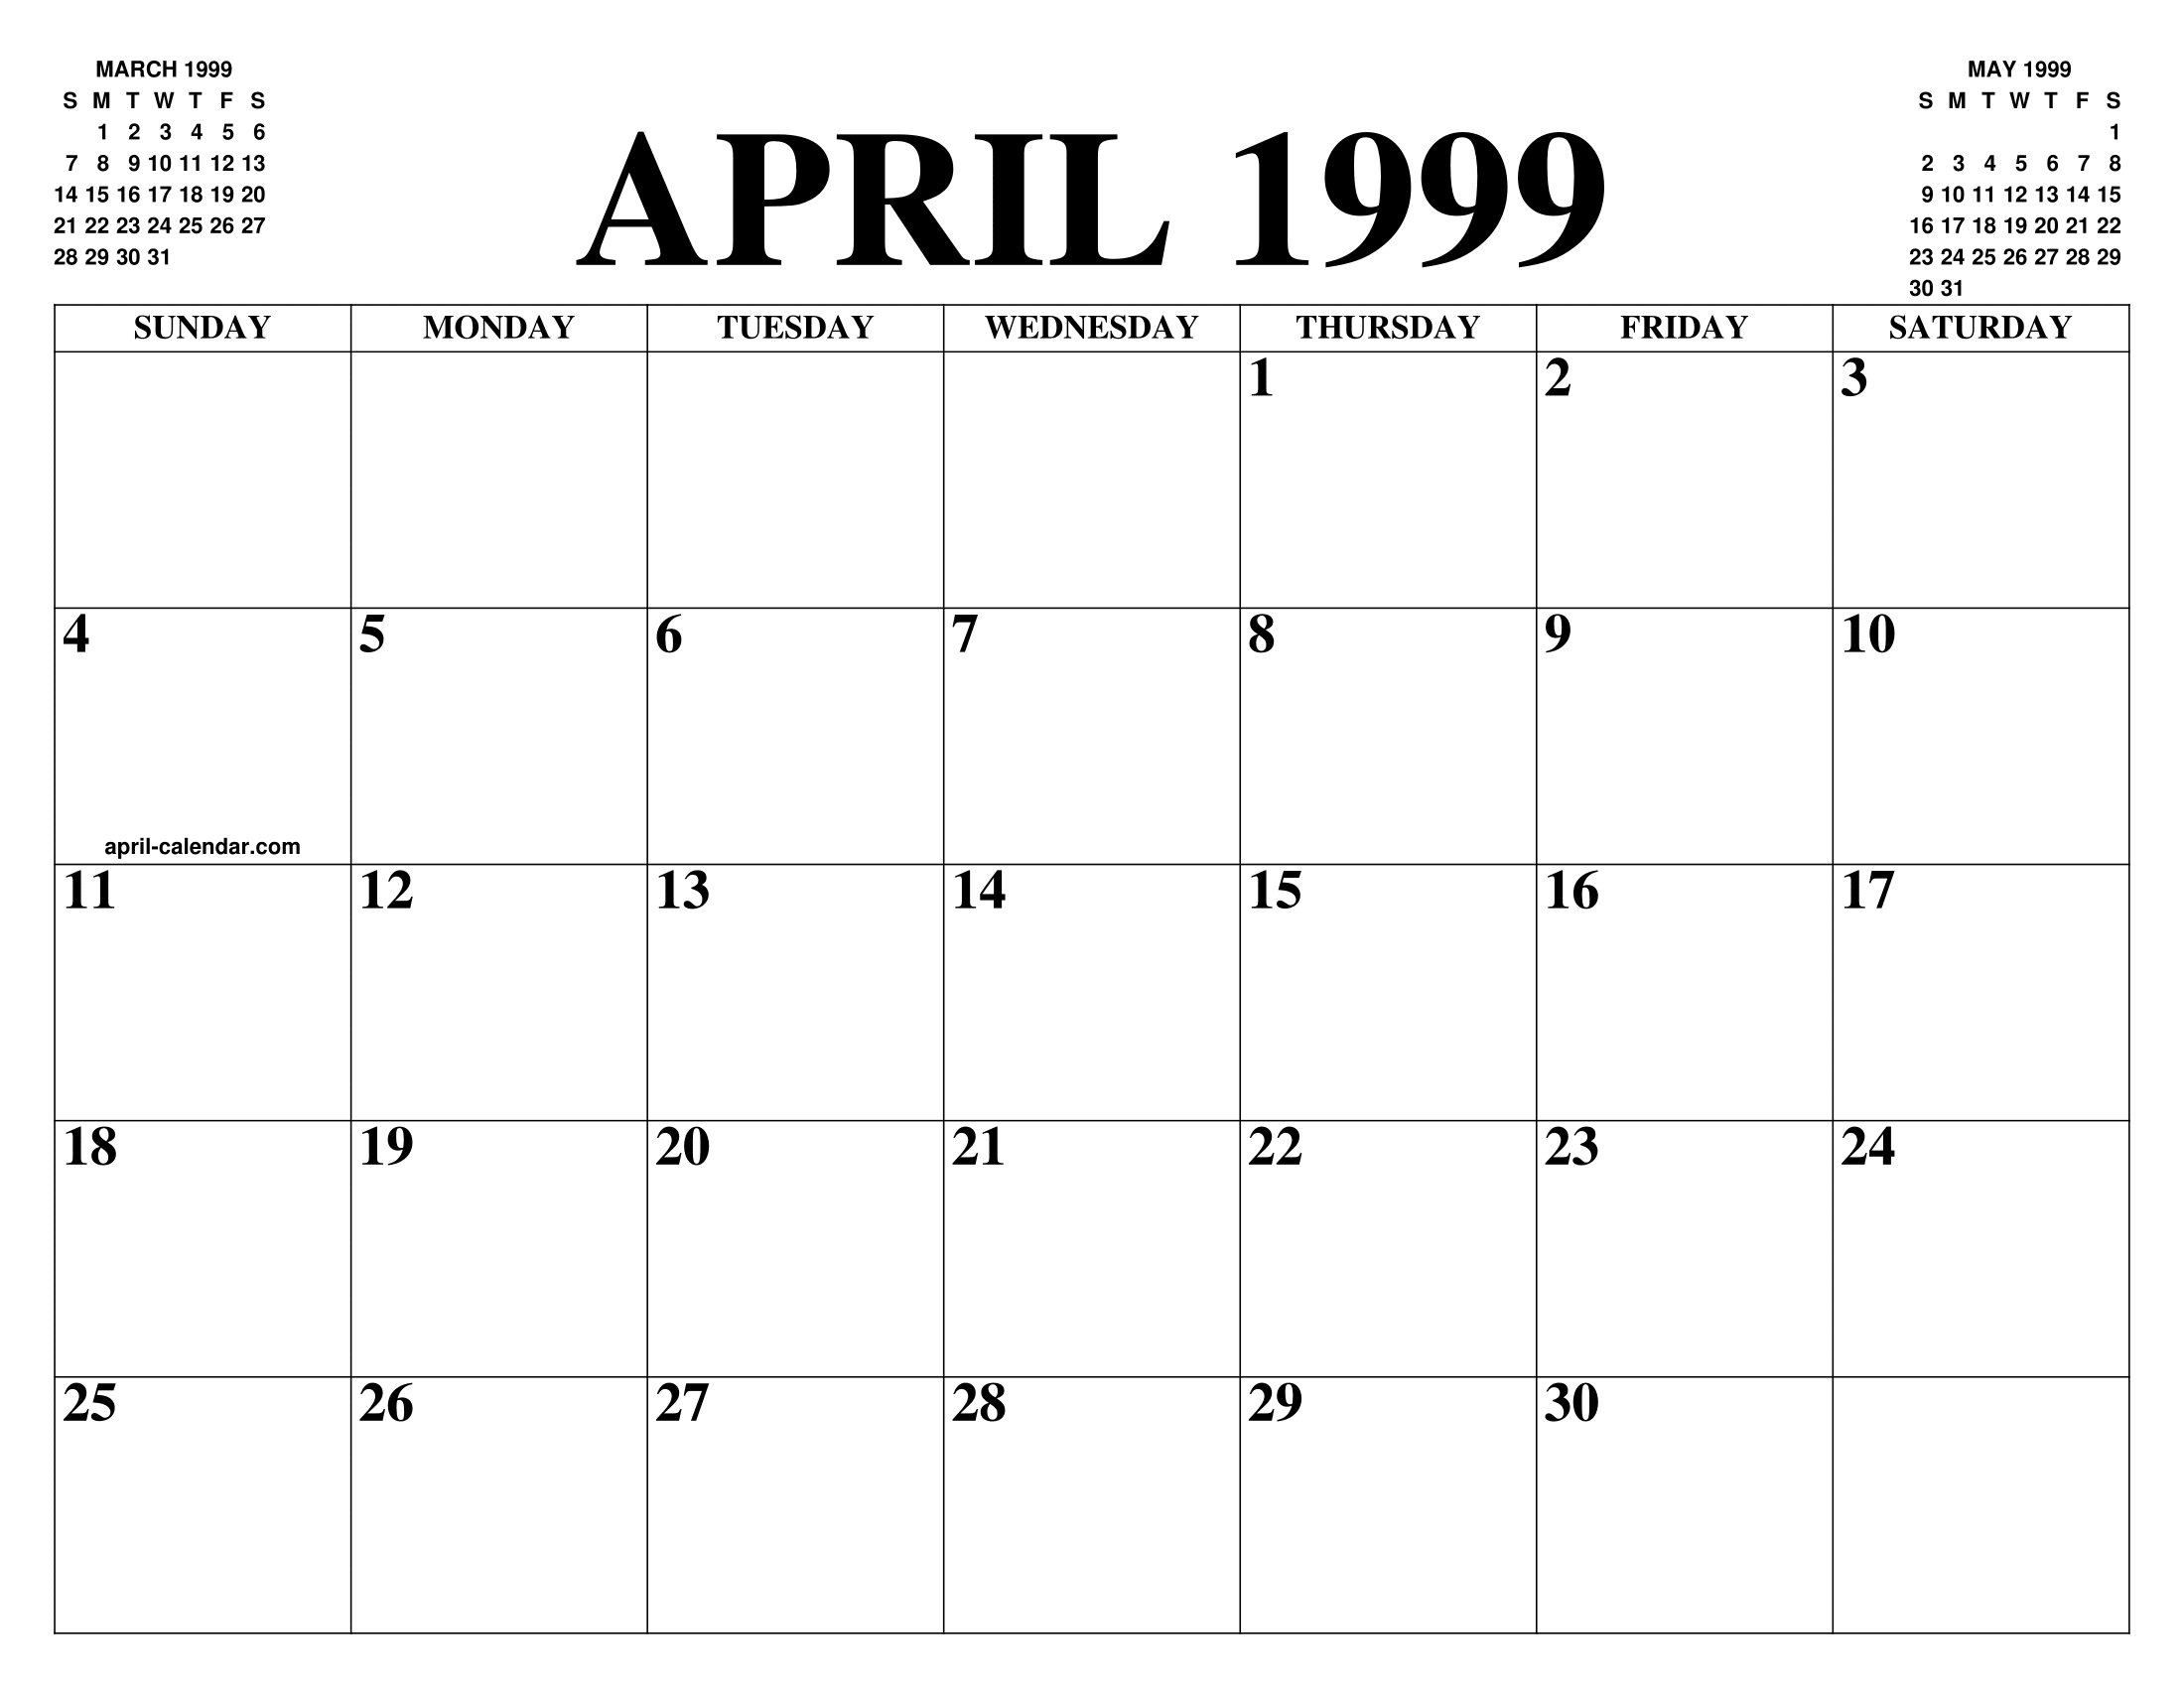 APRIL 1999 CALENDAR OF THE MONTH: FREE PRINTABLE APRIL CALENDAR OF THE